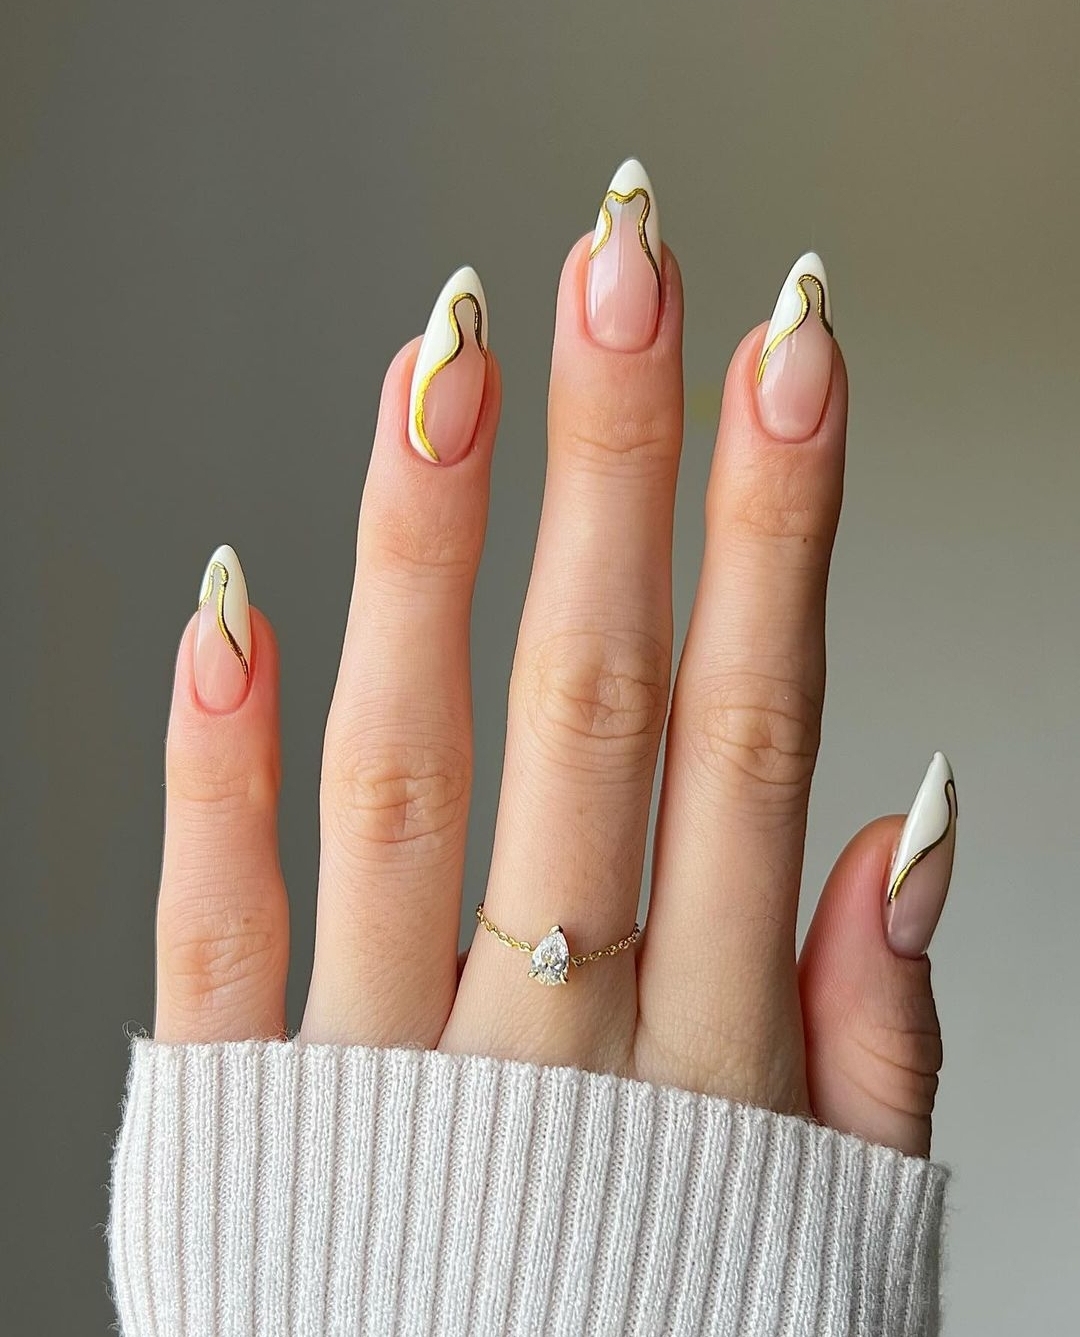 July nail design ideas